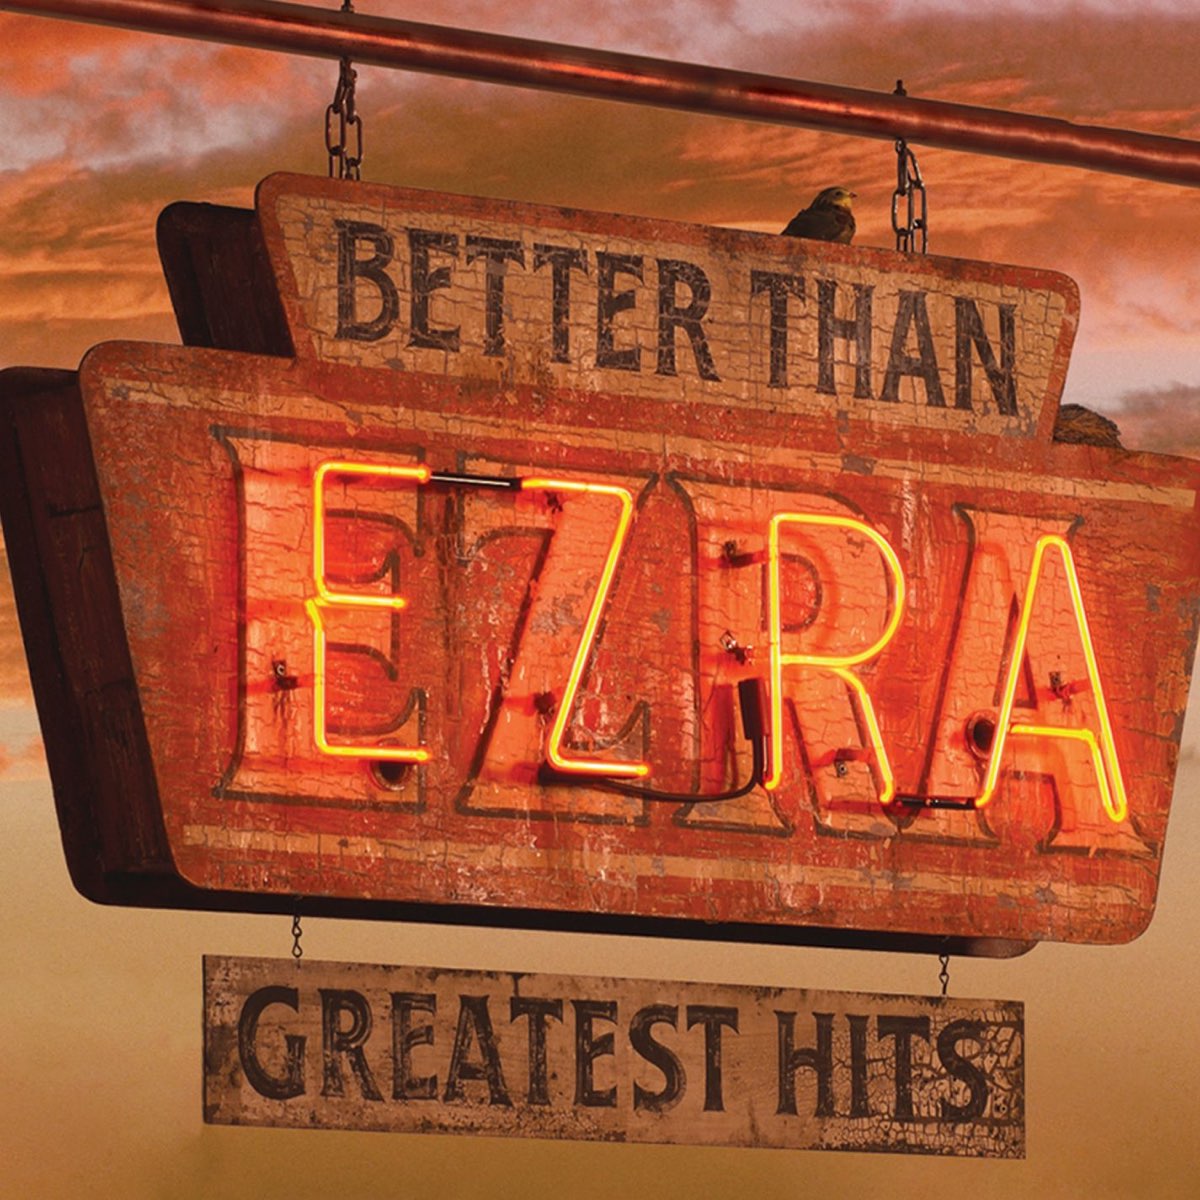 ‎Better Than Ezra Greatest Hits by Better Than Ezra on Apple Music